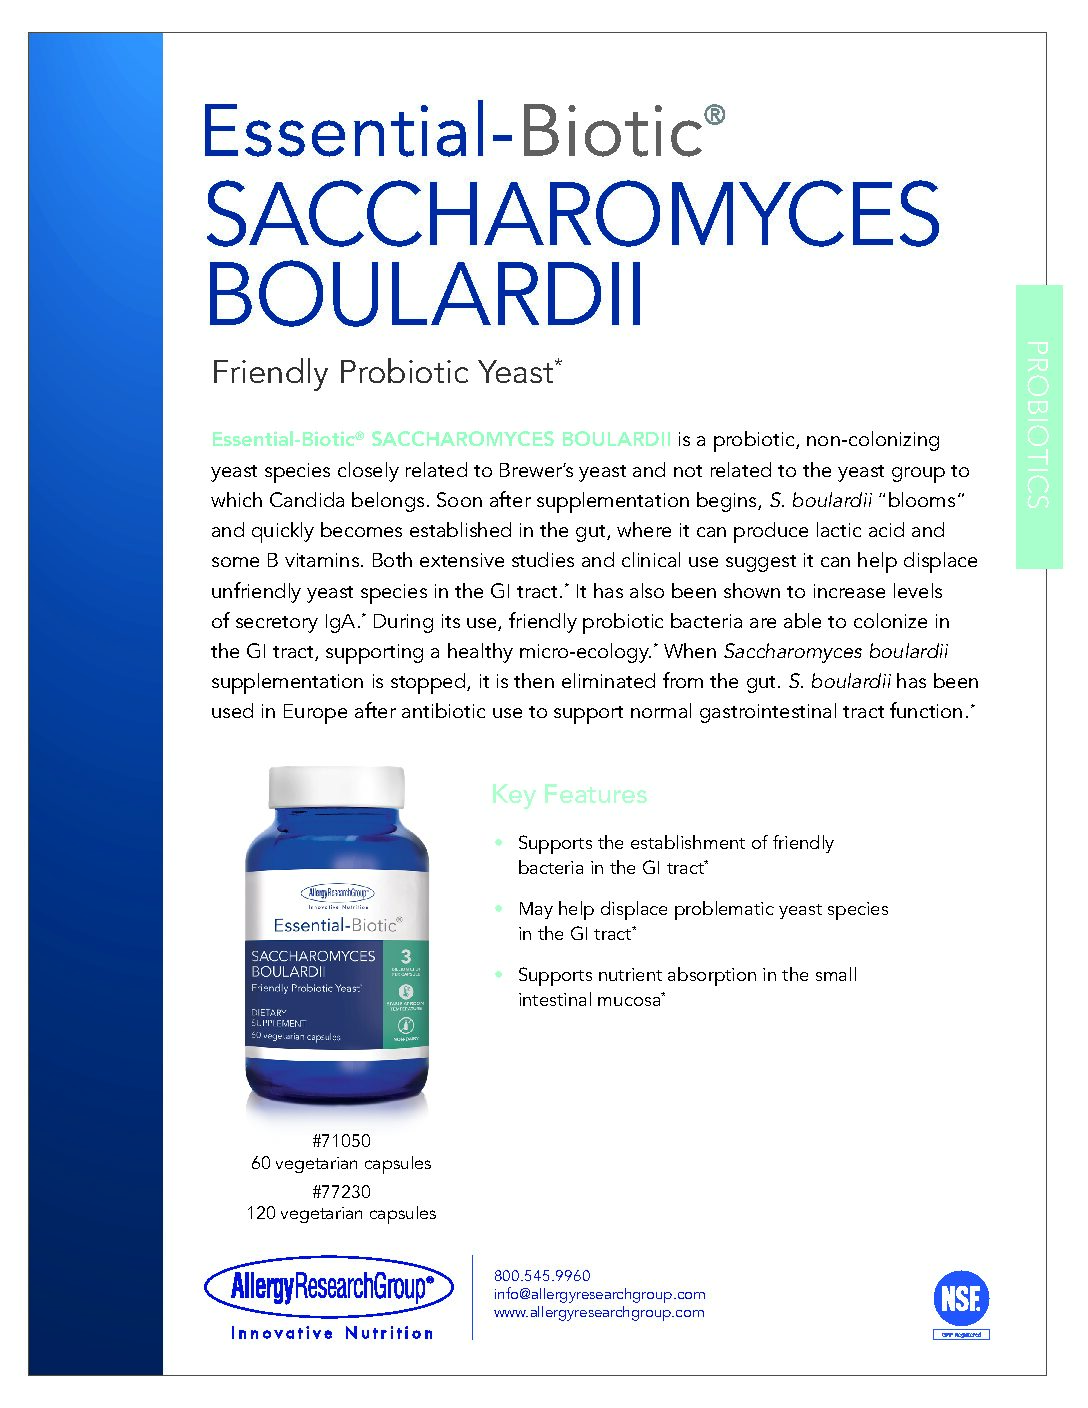 Saccharomyces Boulardii (40 capsules)